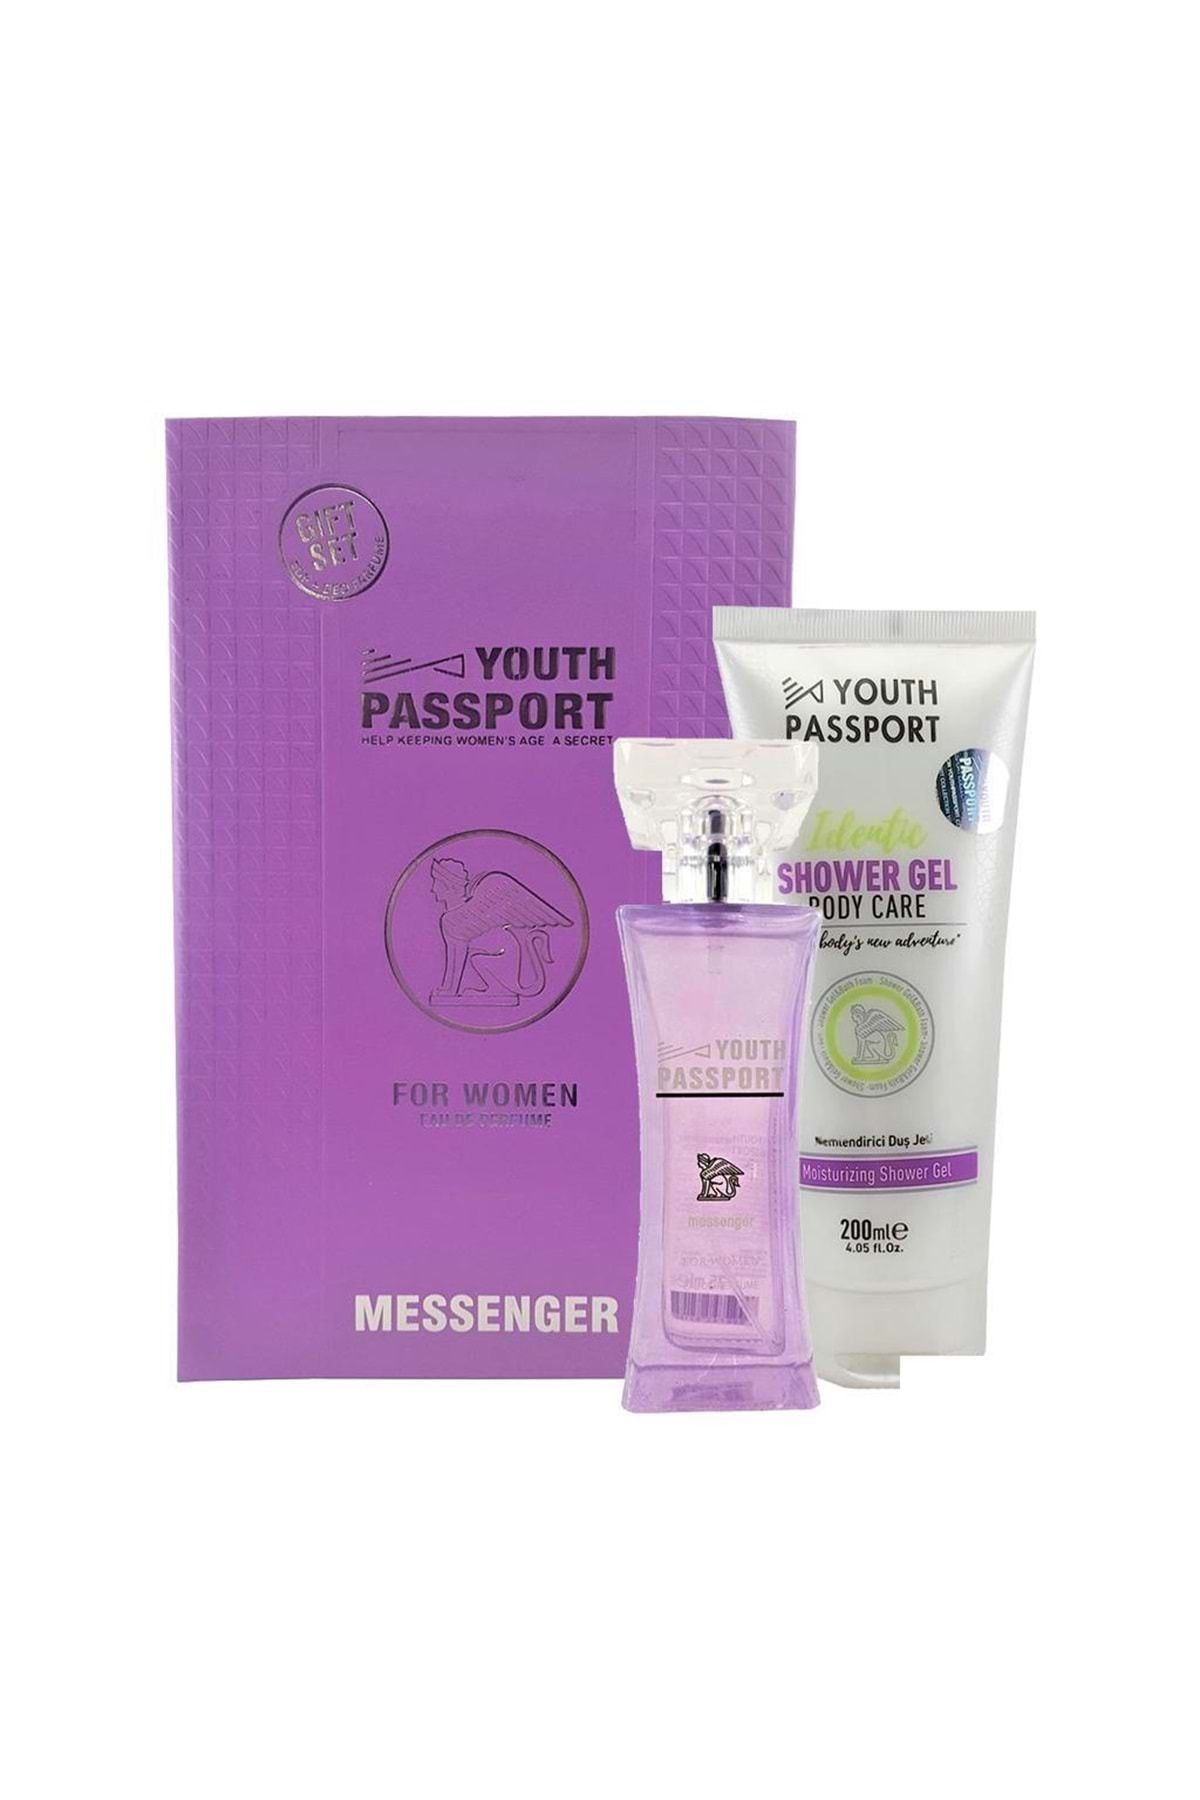 Youth Passport Messenger Kadın Parfümü 75ml + Duş Jeli 200ml Set